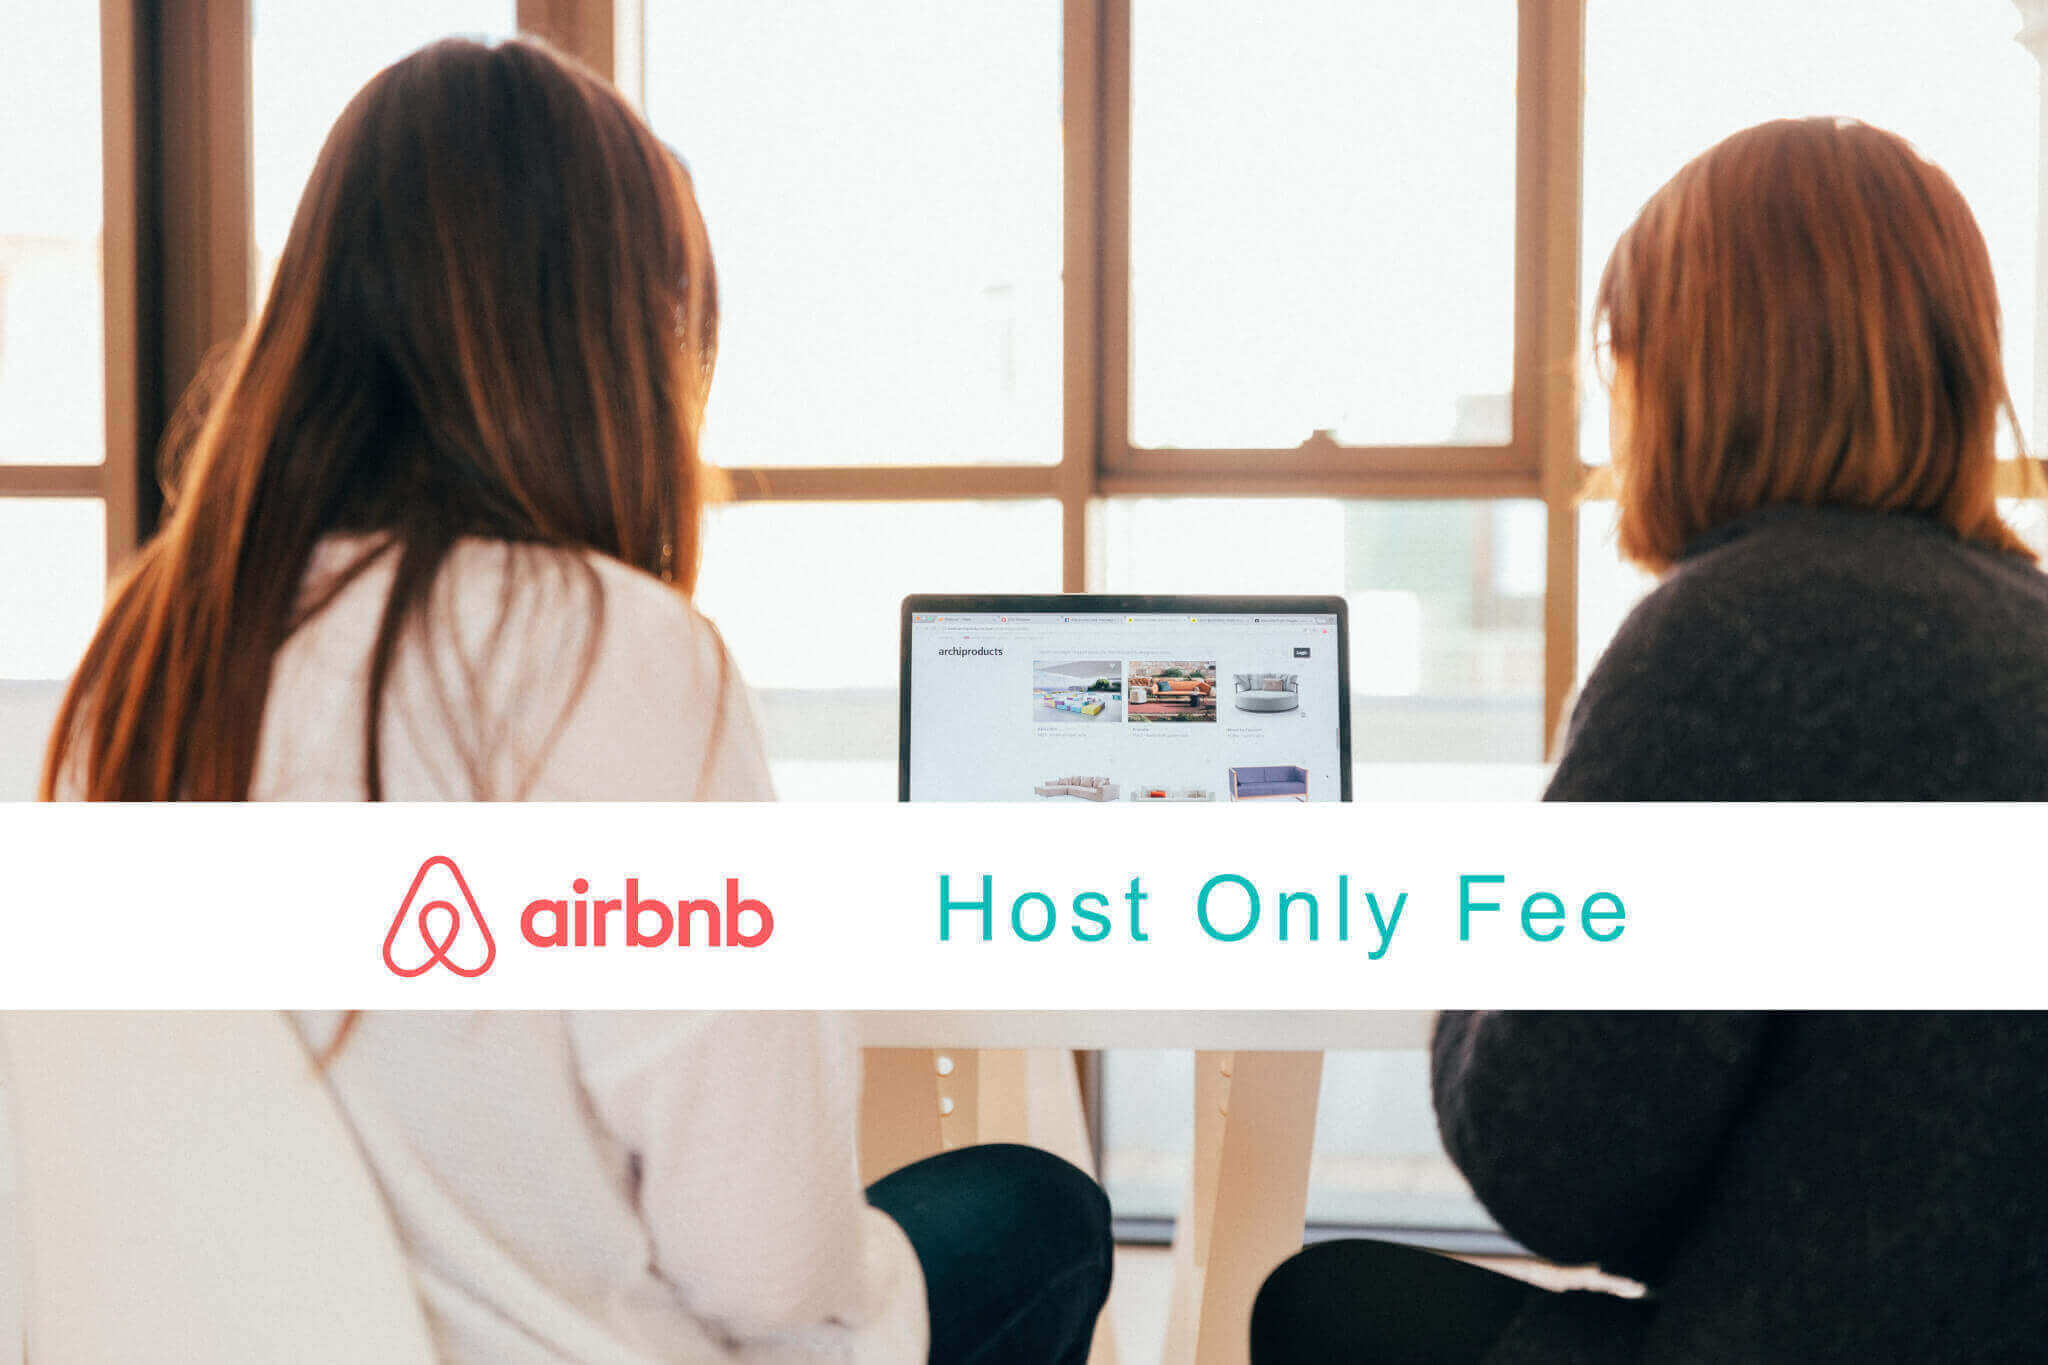 airbnb login